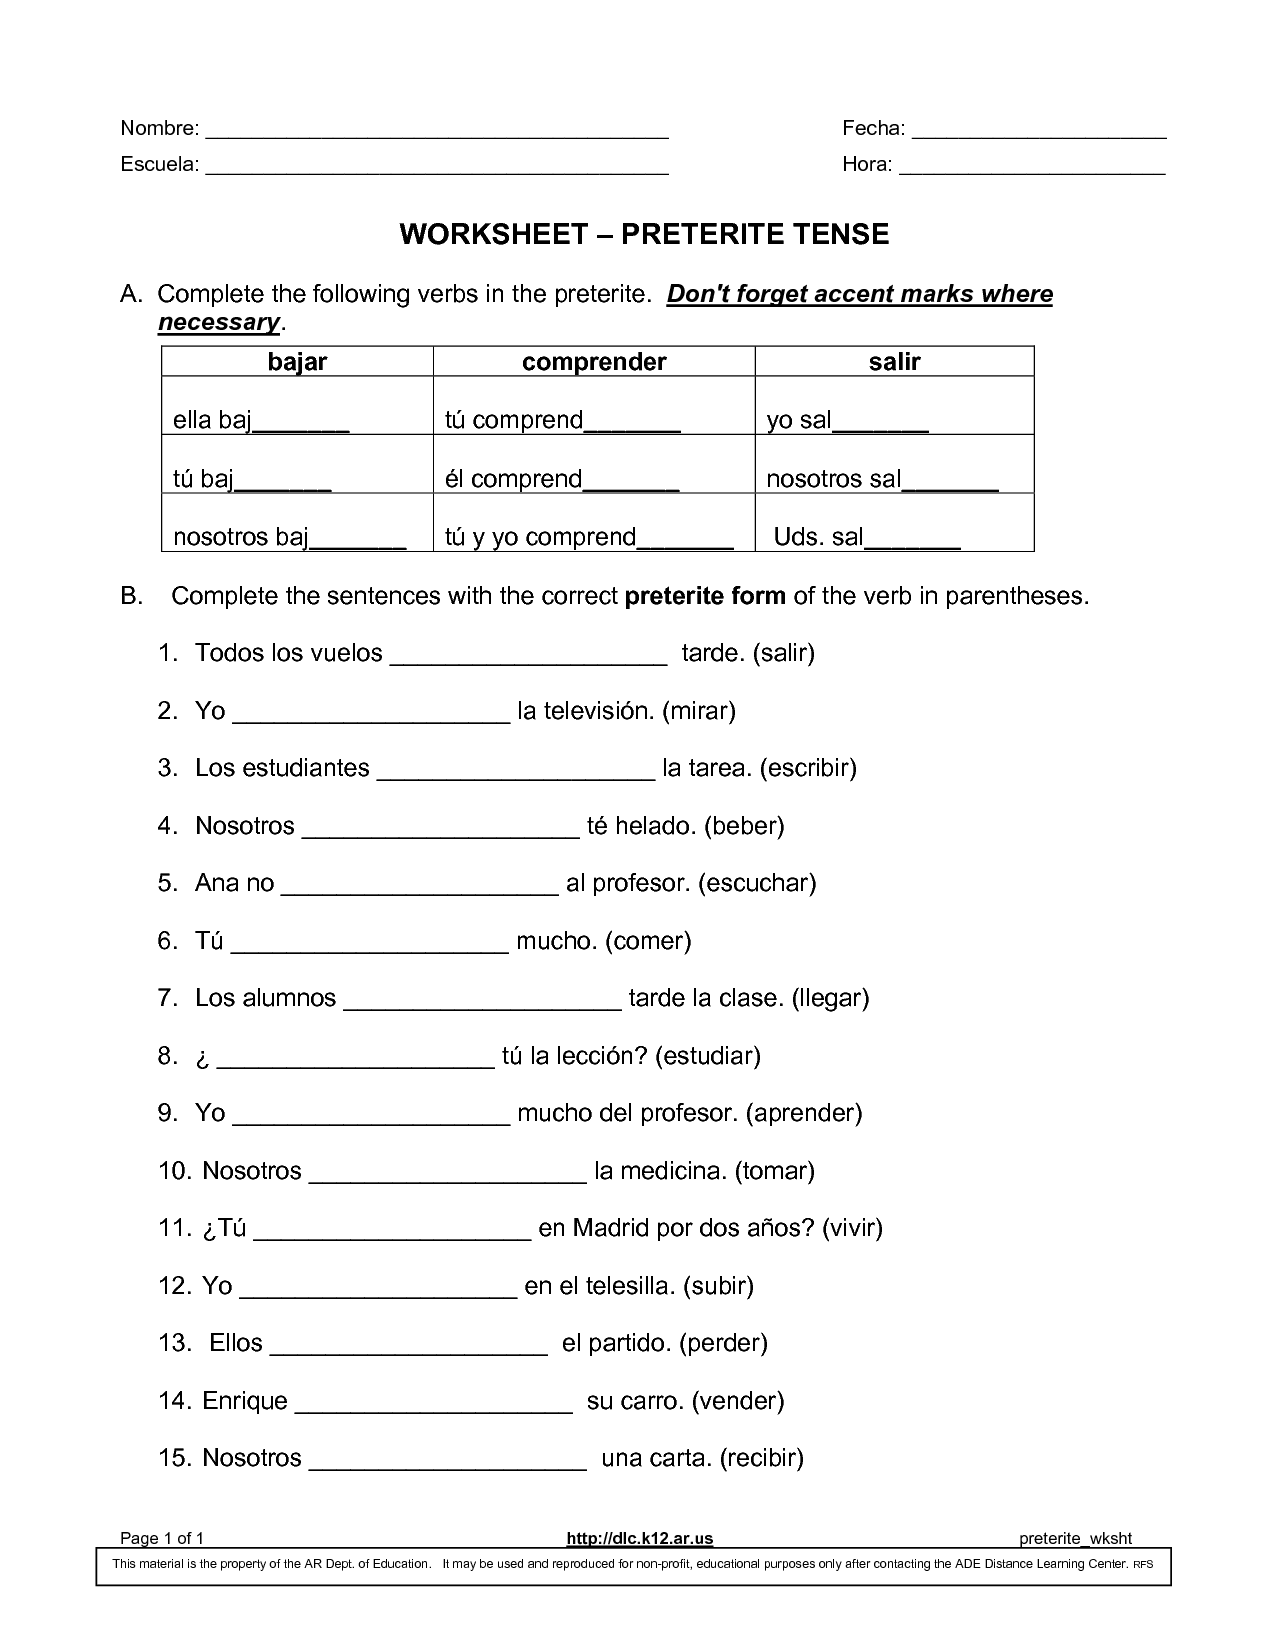 18-best-images-of-preterite-tense-worksheets-spanish-preterite-tense-practice-worksheet-car